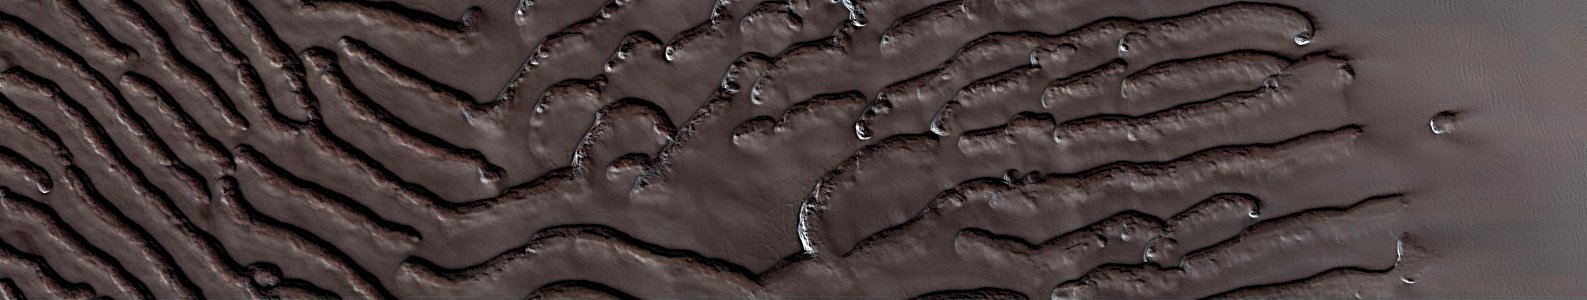 Mars - South Polar Layered Deposits photo